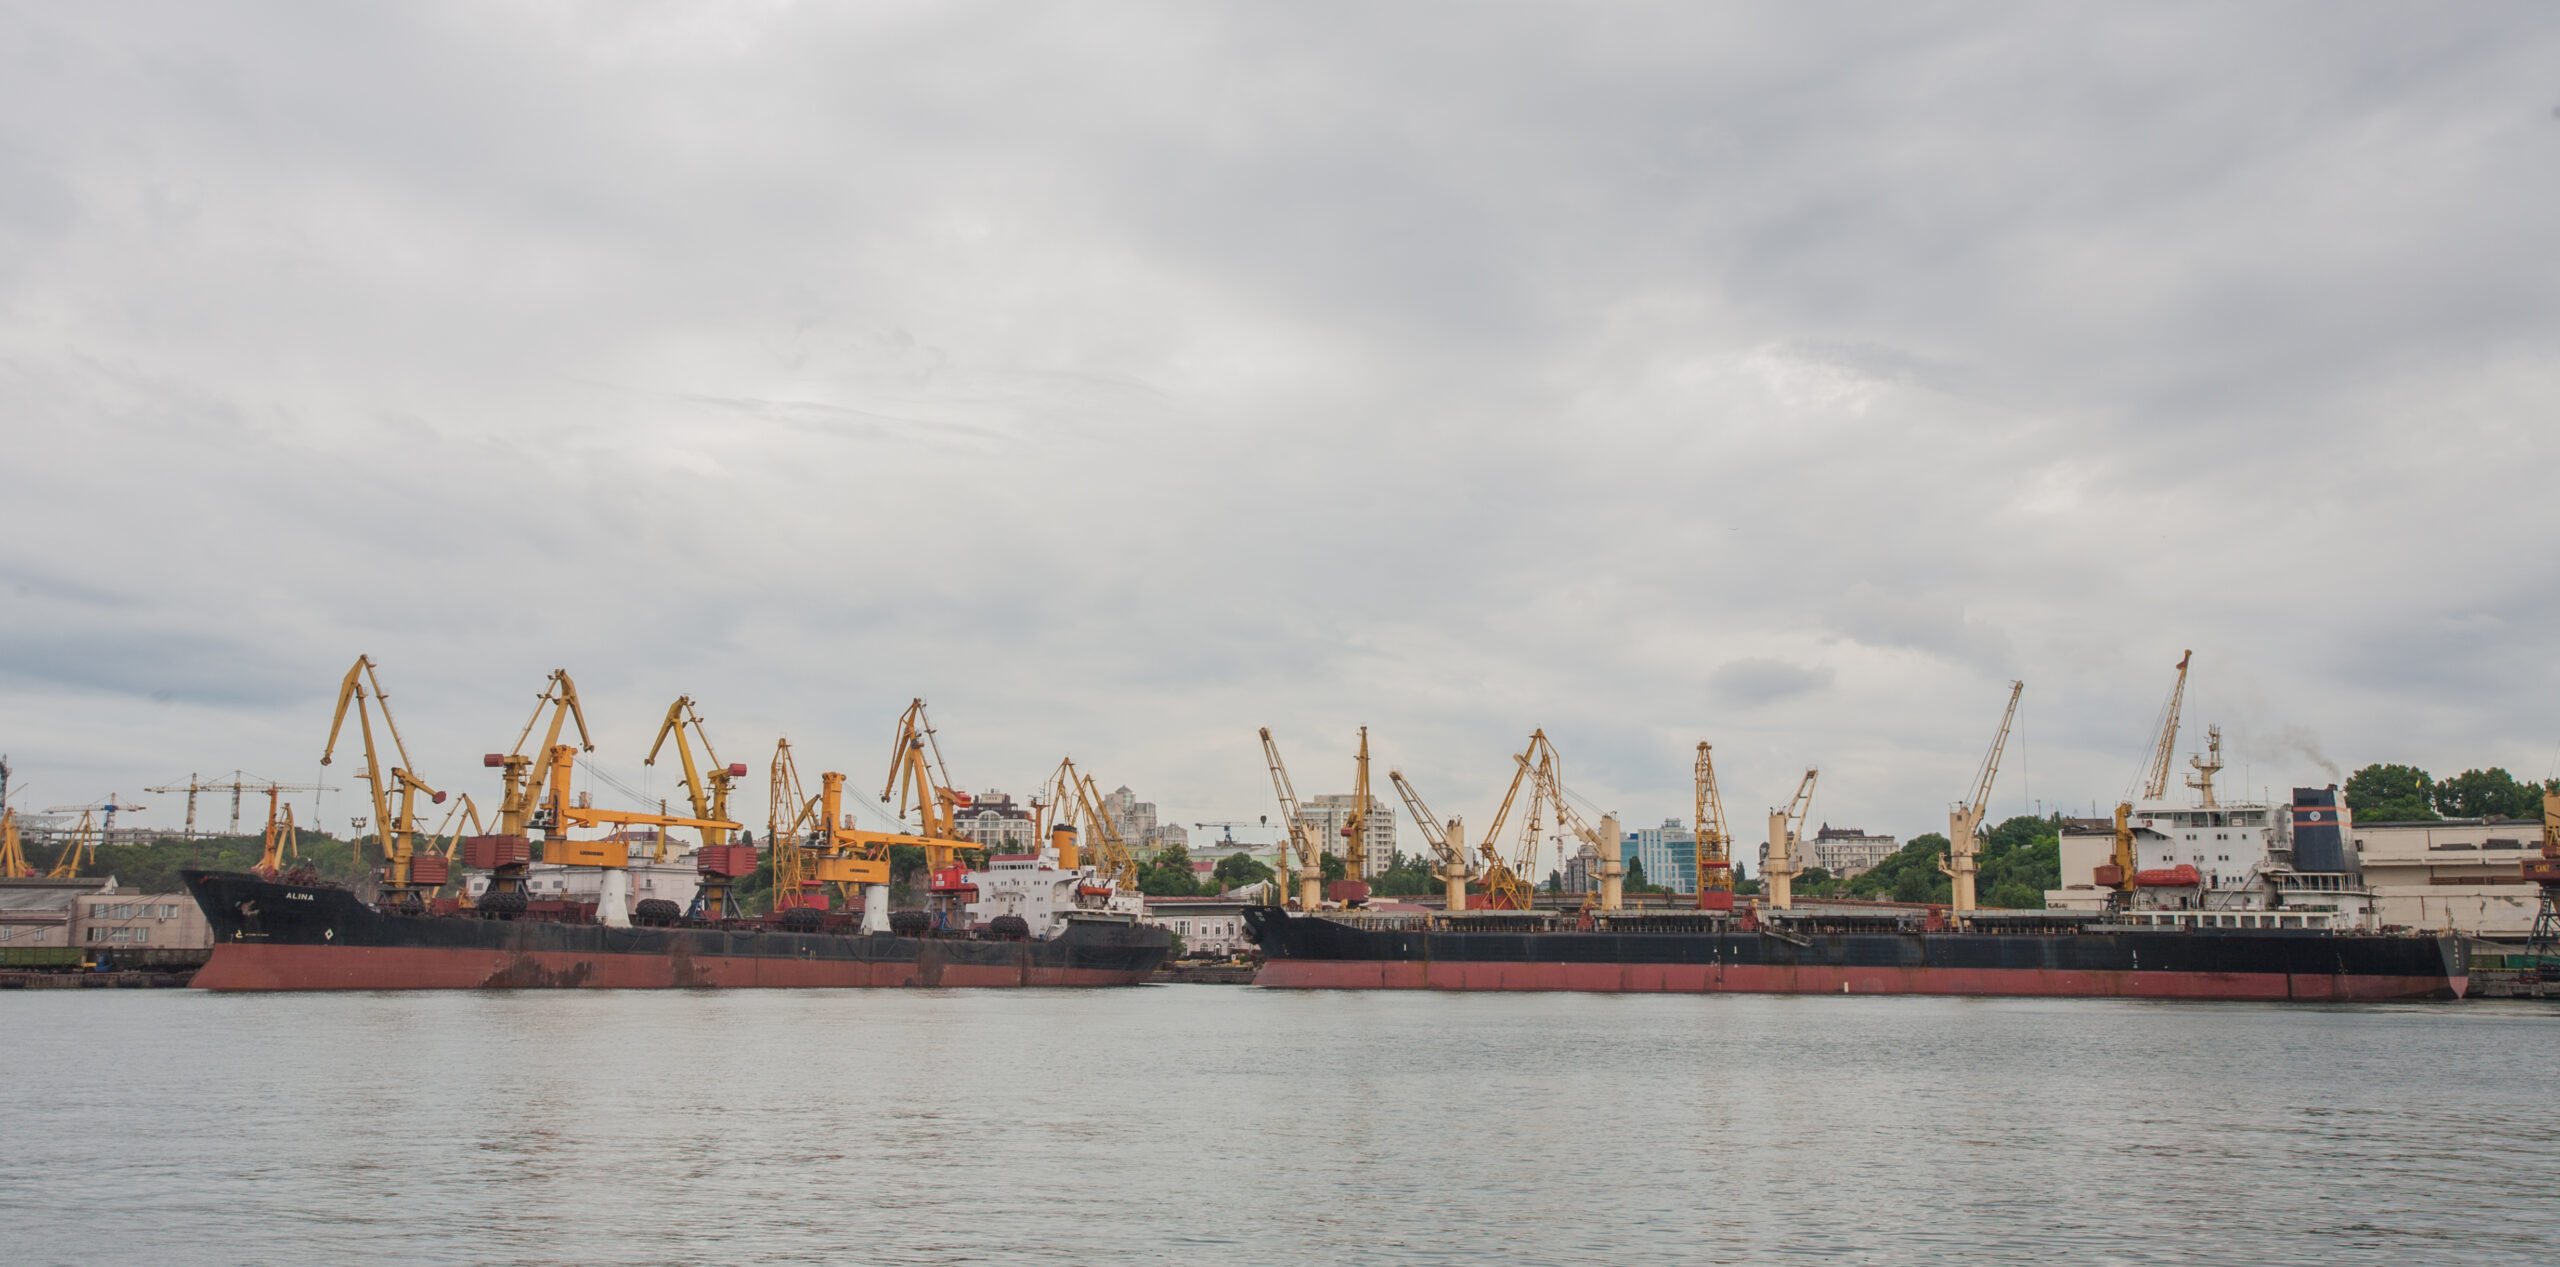 Lifting cargo cranes, ships and grain dryer in Sea Port of Odessa, Black Sea, Ukraine.